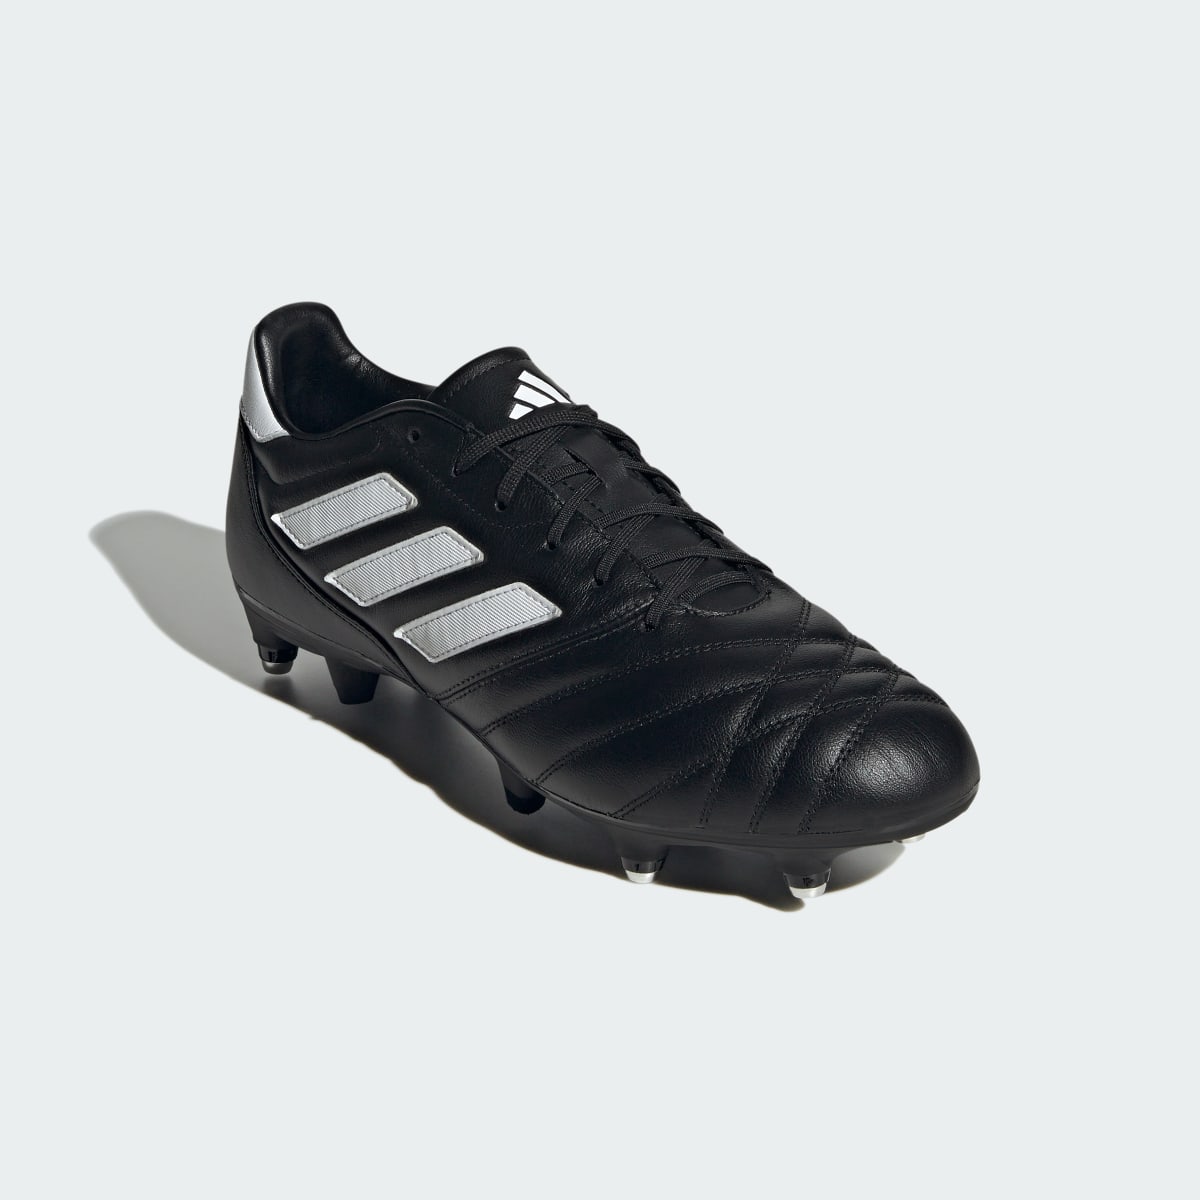 Adidas Copa Gloro Soft Ground Boots. 5